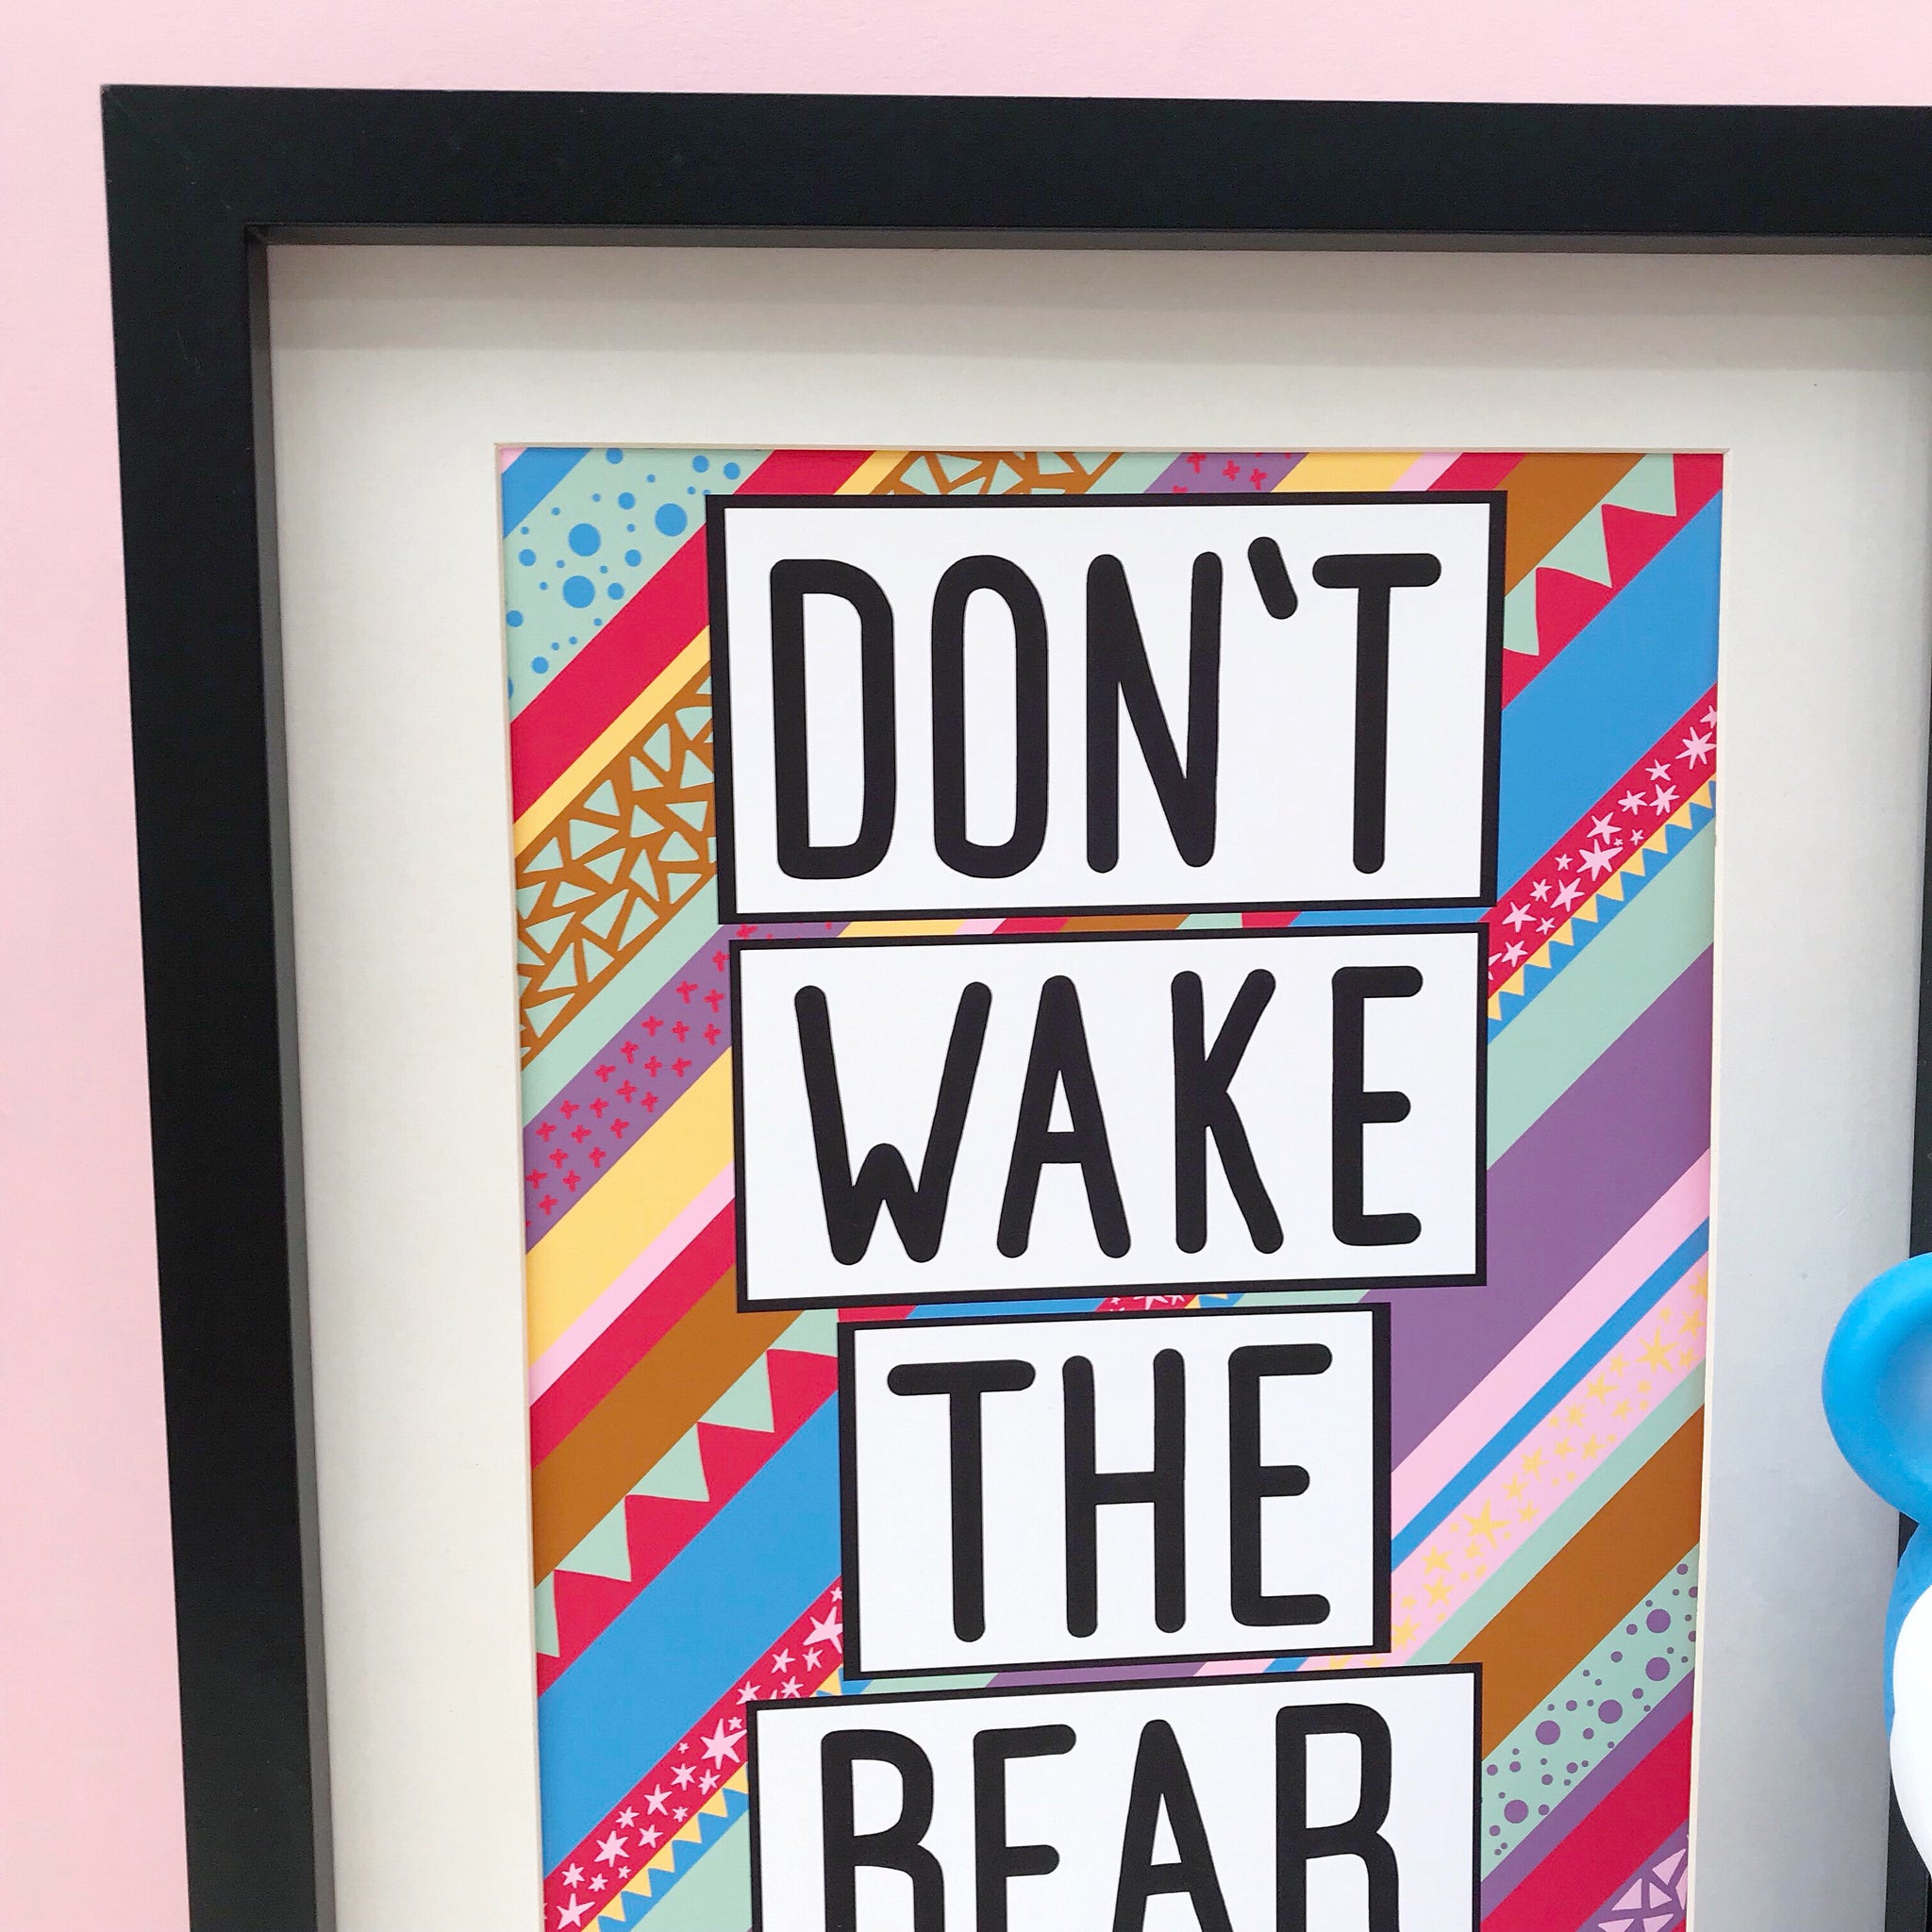 Don't Wake The Bear Print